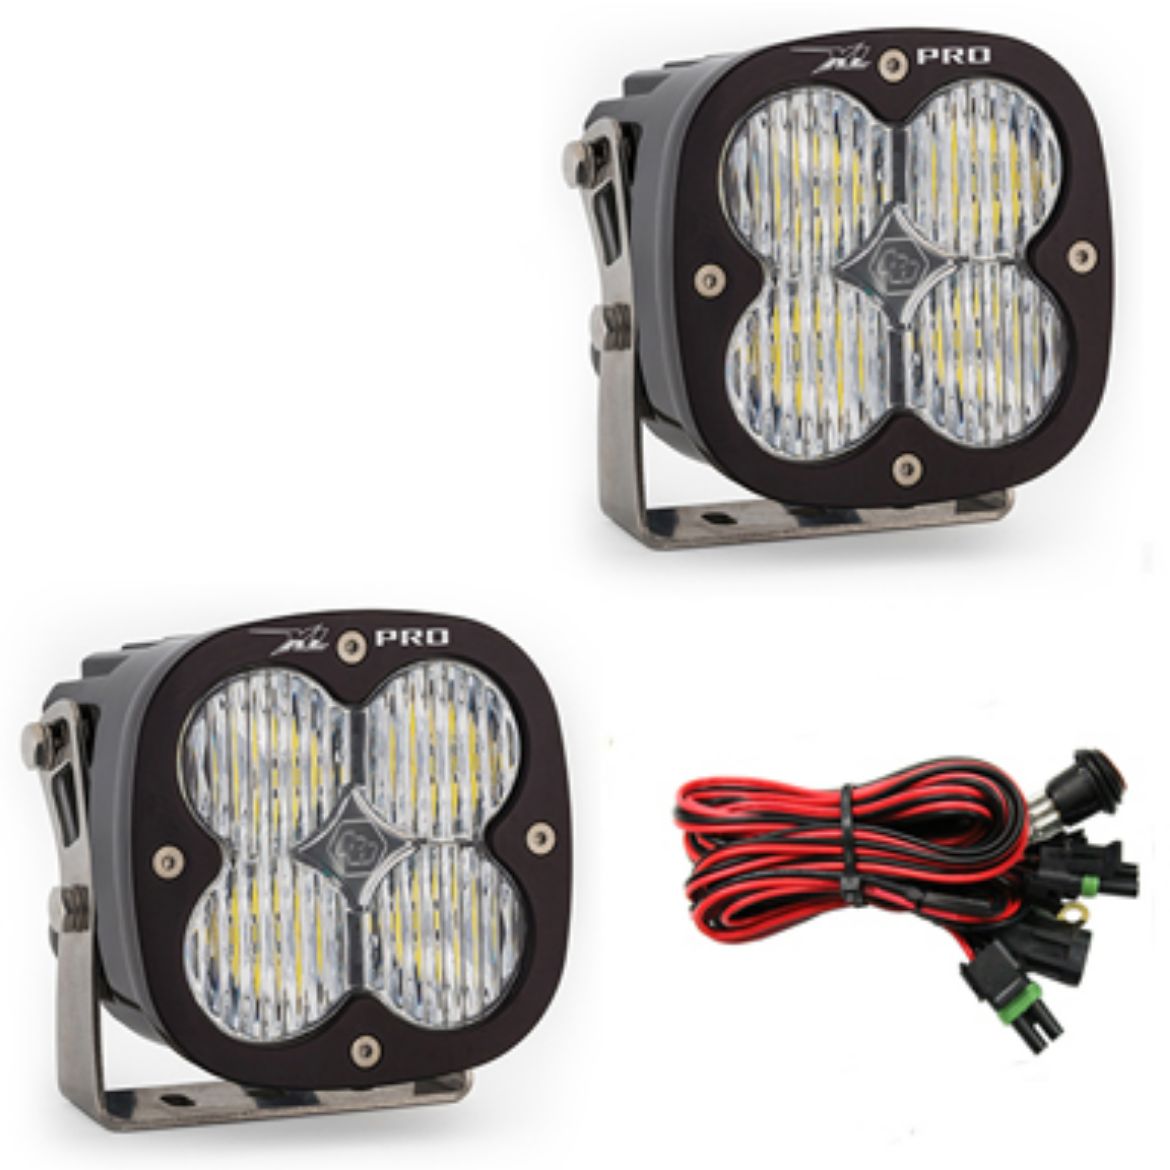 Picture of LED Light Pods Pair XL Pro Series Baja Designs